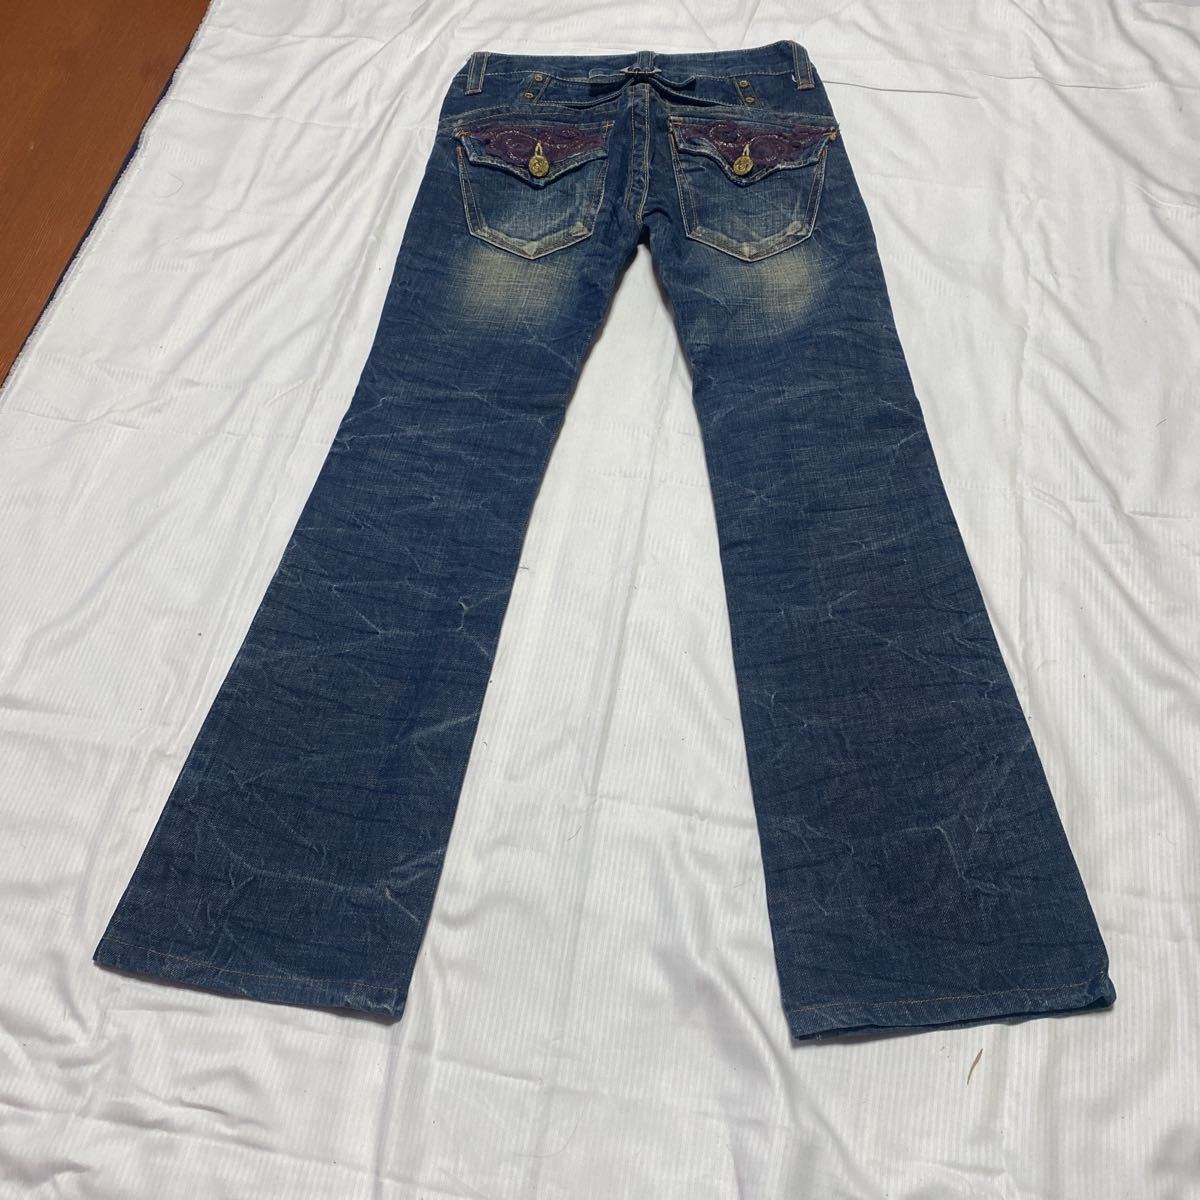 02 REDPEPPER красный перец flair джинсы размер 25 надпись Корея производства 